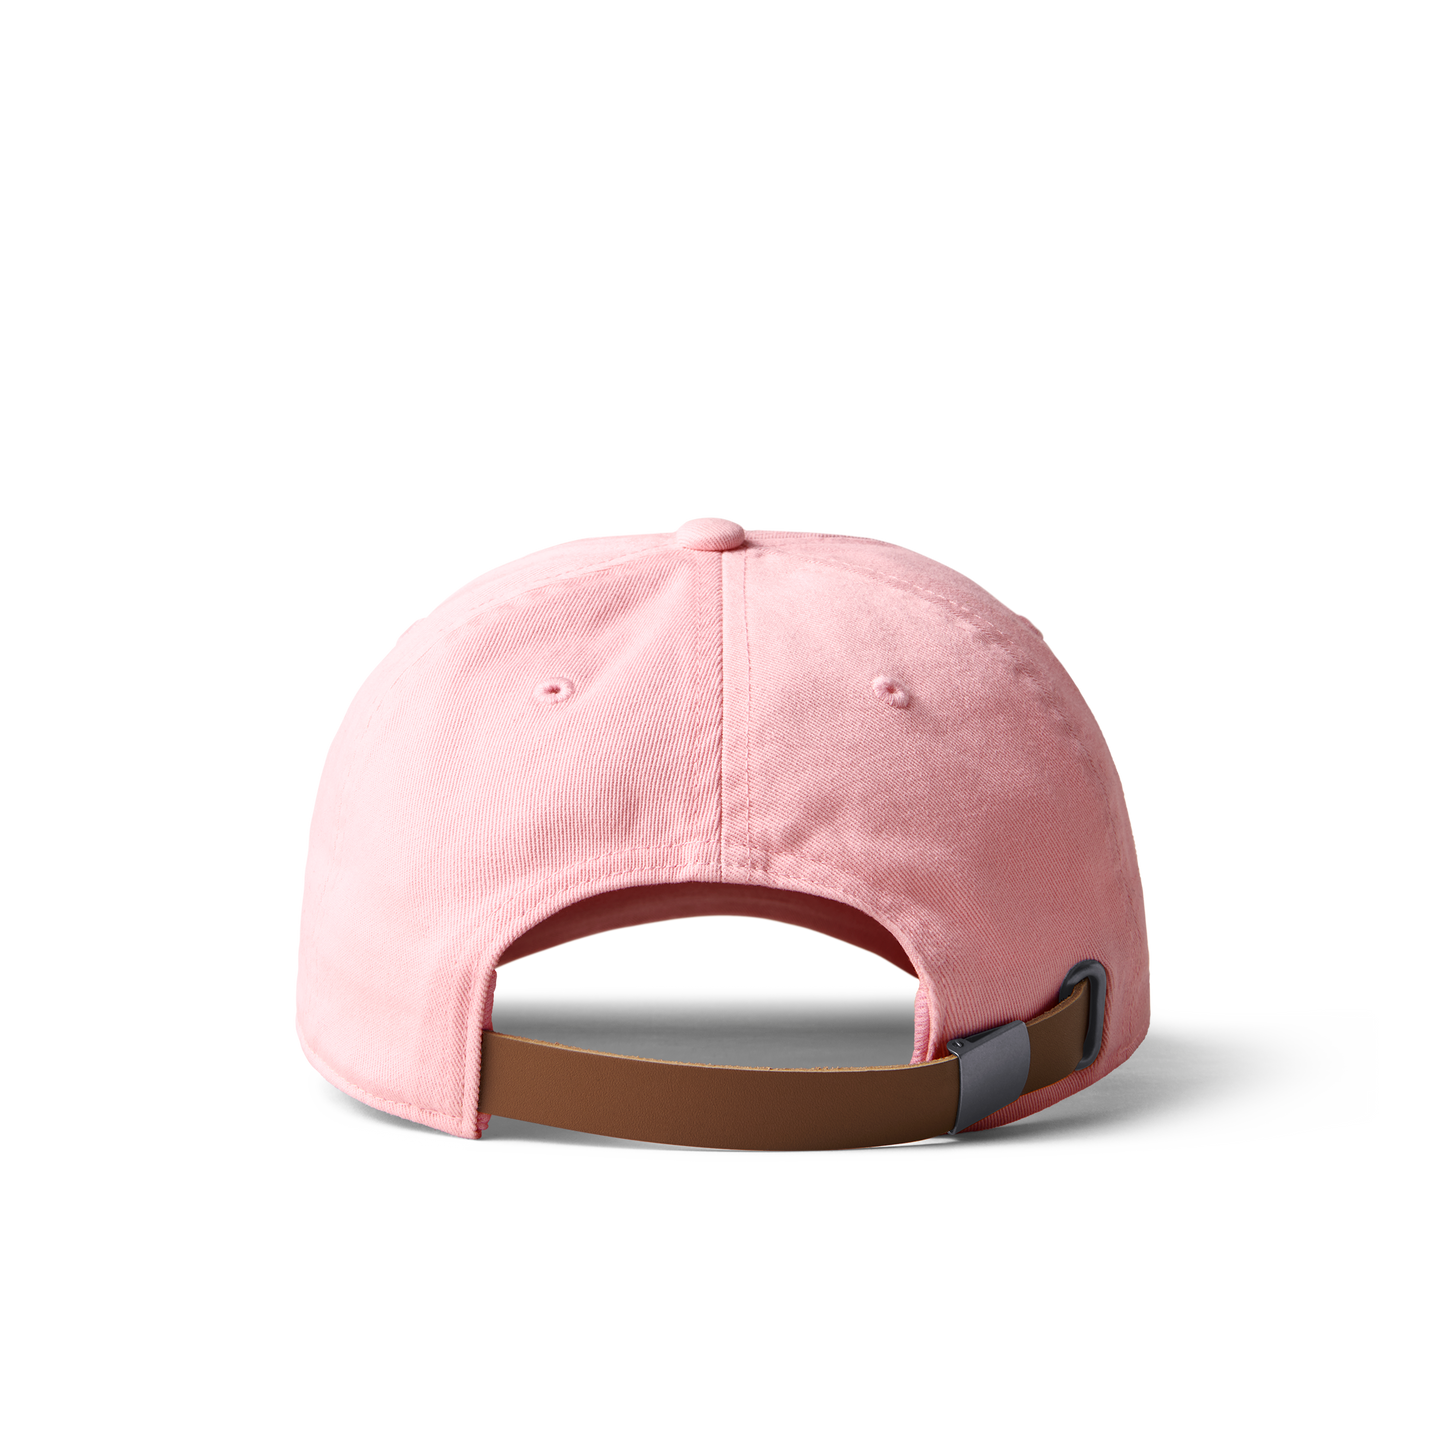 YETI Cappello in pelle con logo badge Blossom Pink